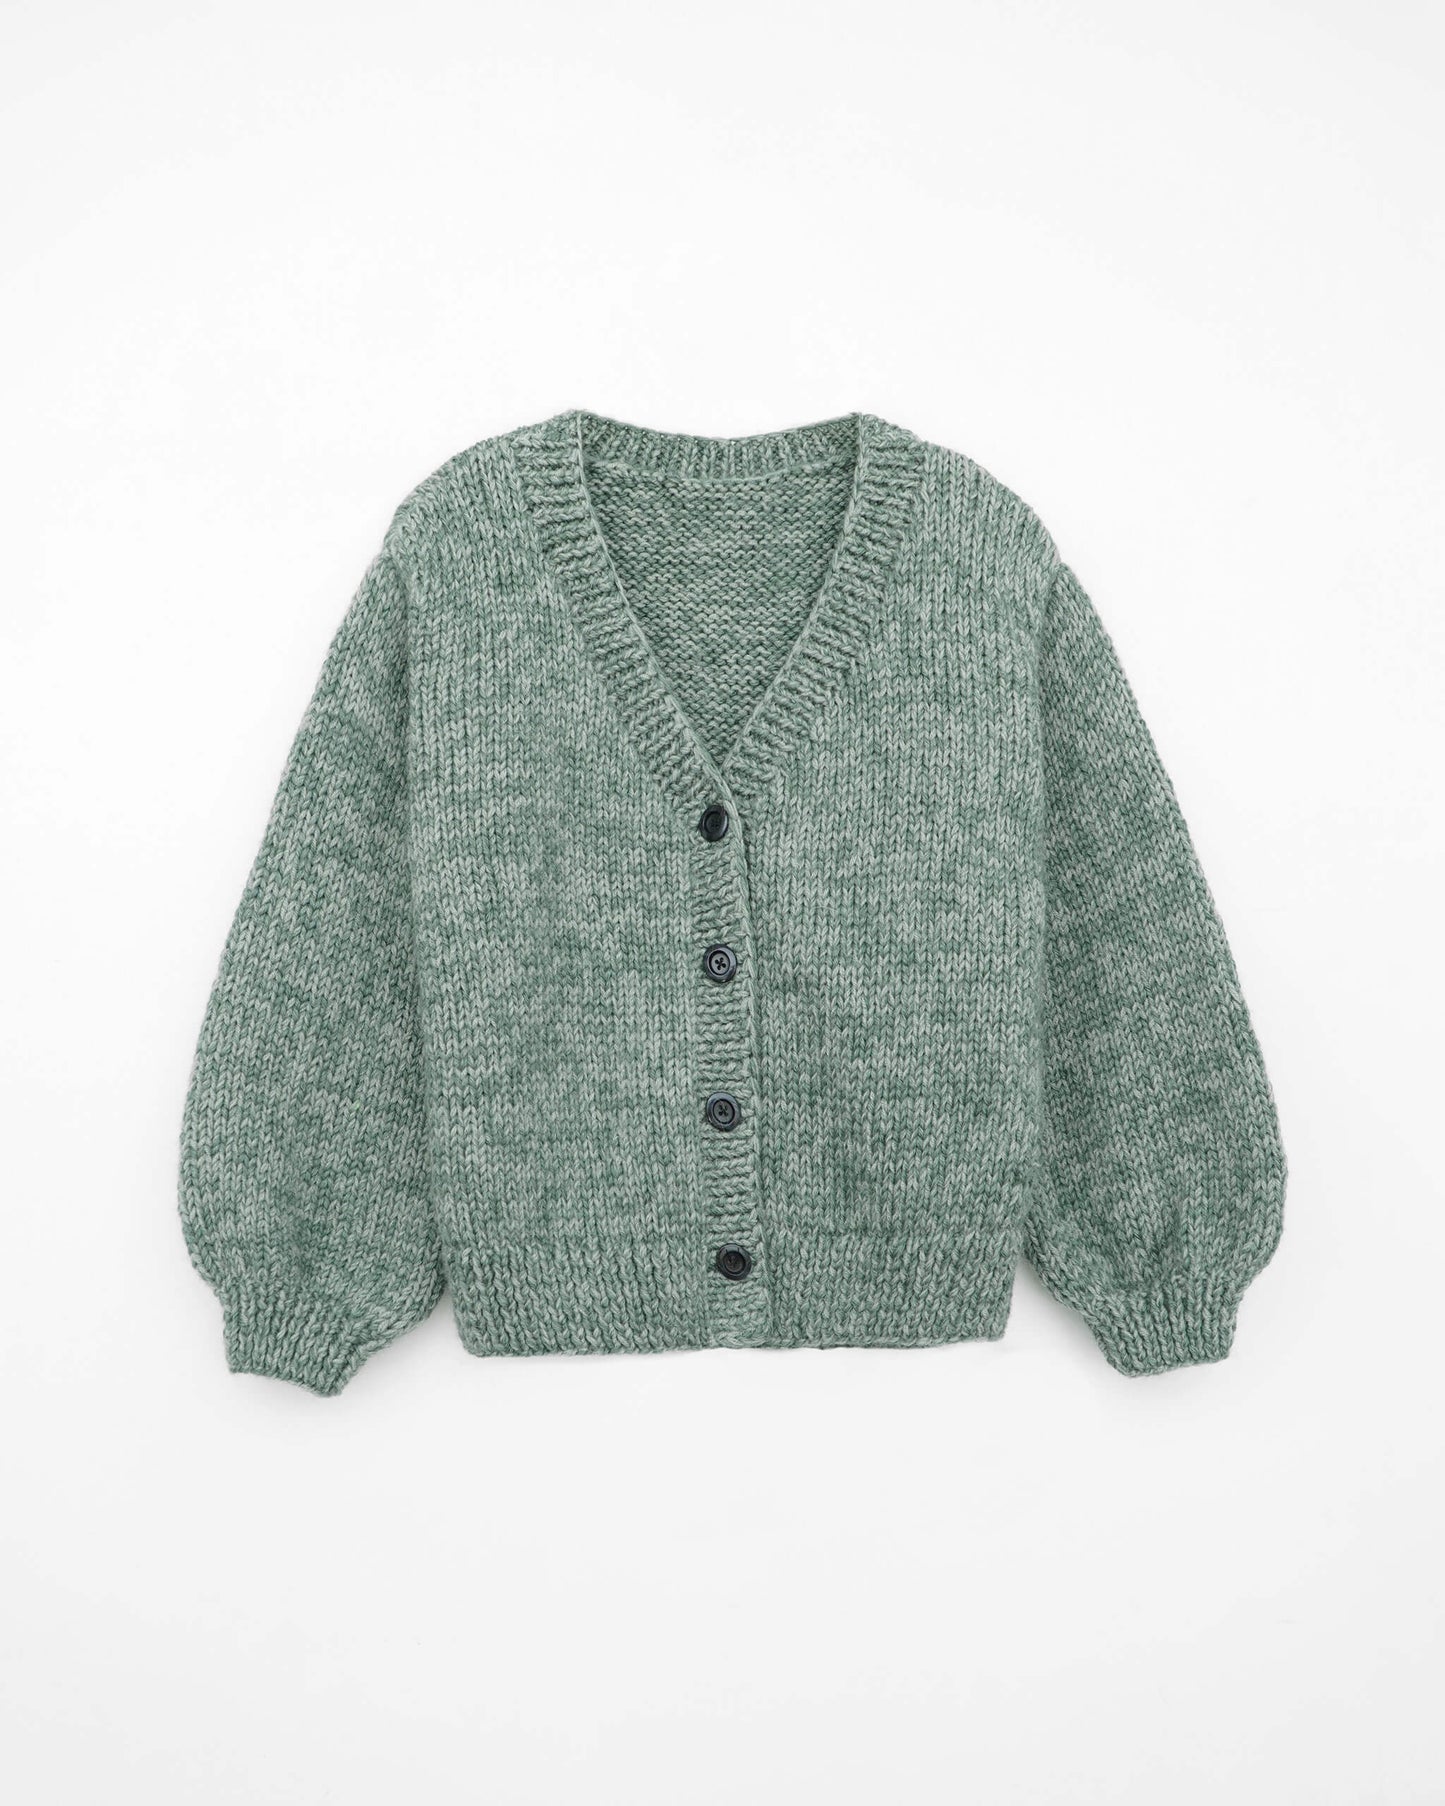 Cardigan No.35 | Easy knitting pattern